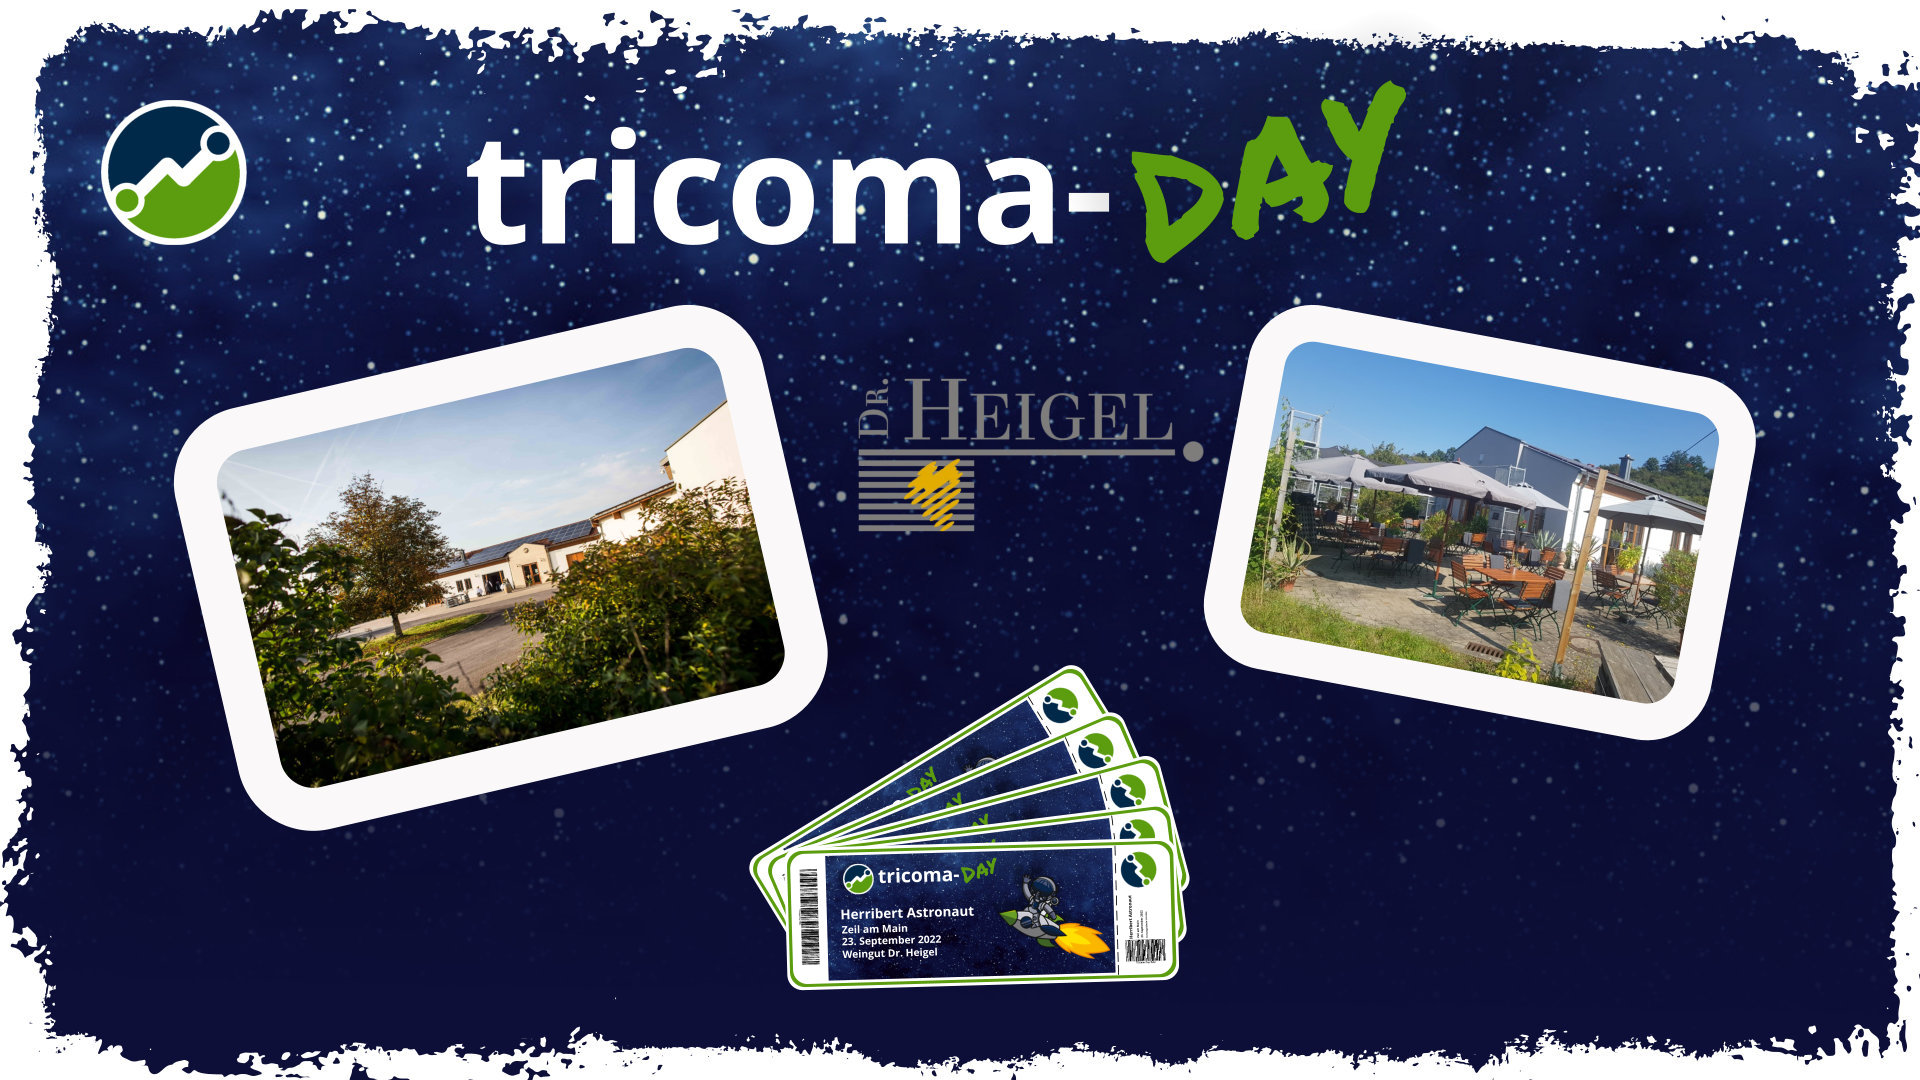 tricoma-DAY Update 1.0